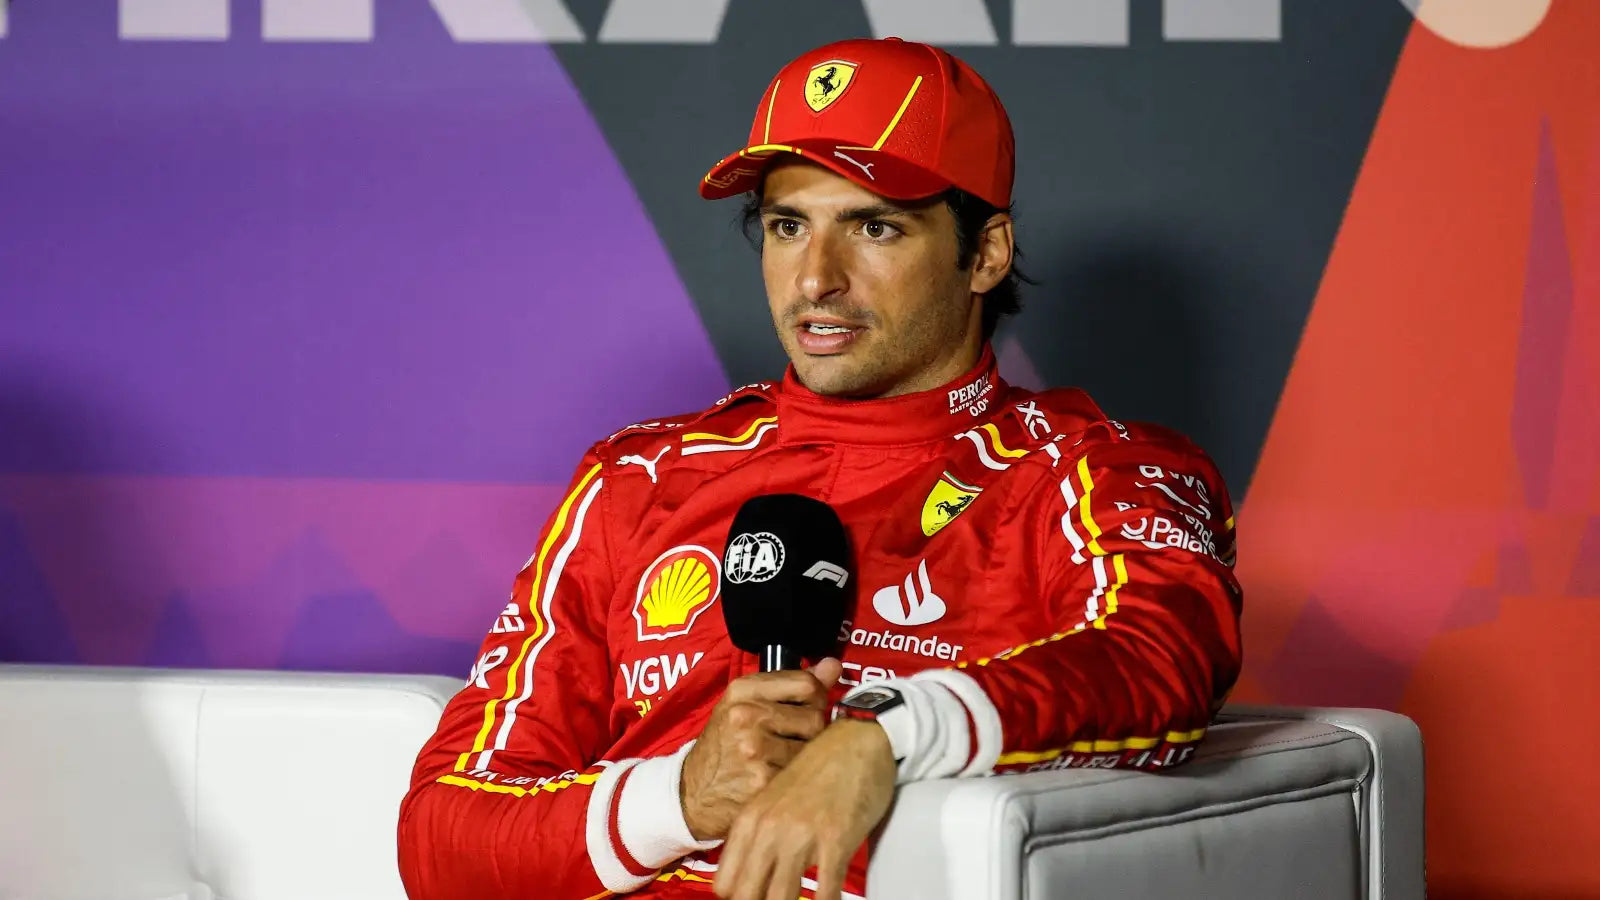 Carlos Sainz names the rival team he expects to surge in Saudi Arabia